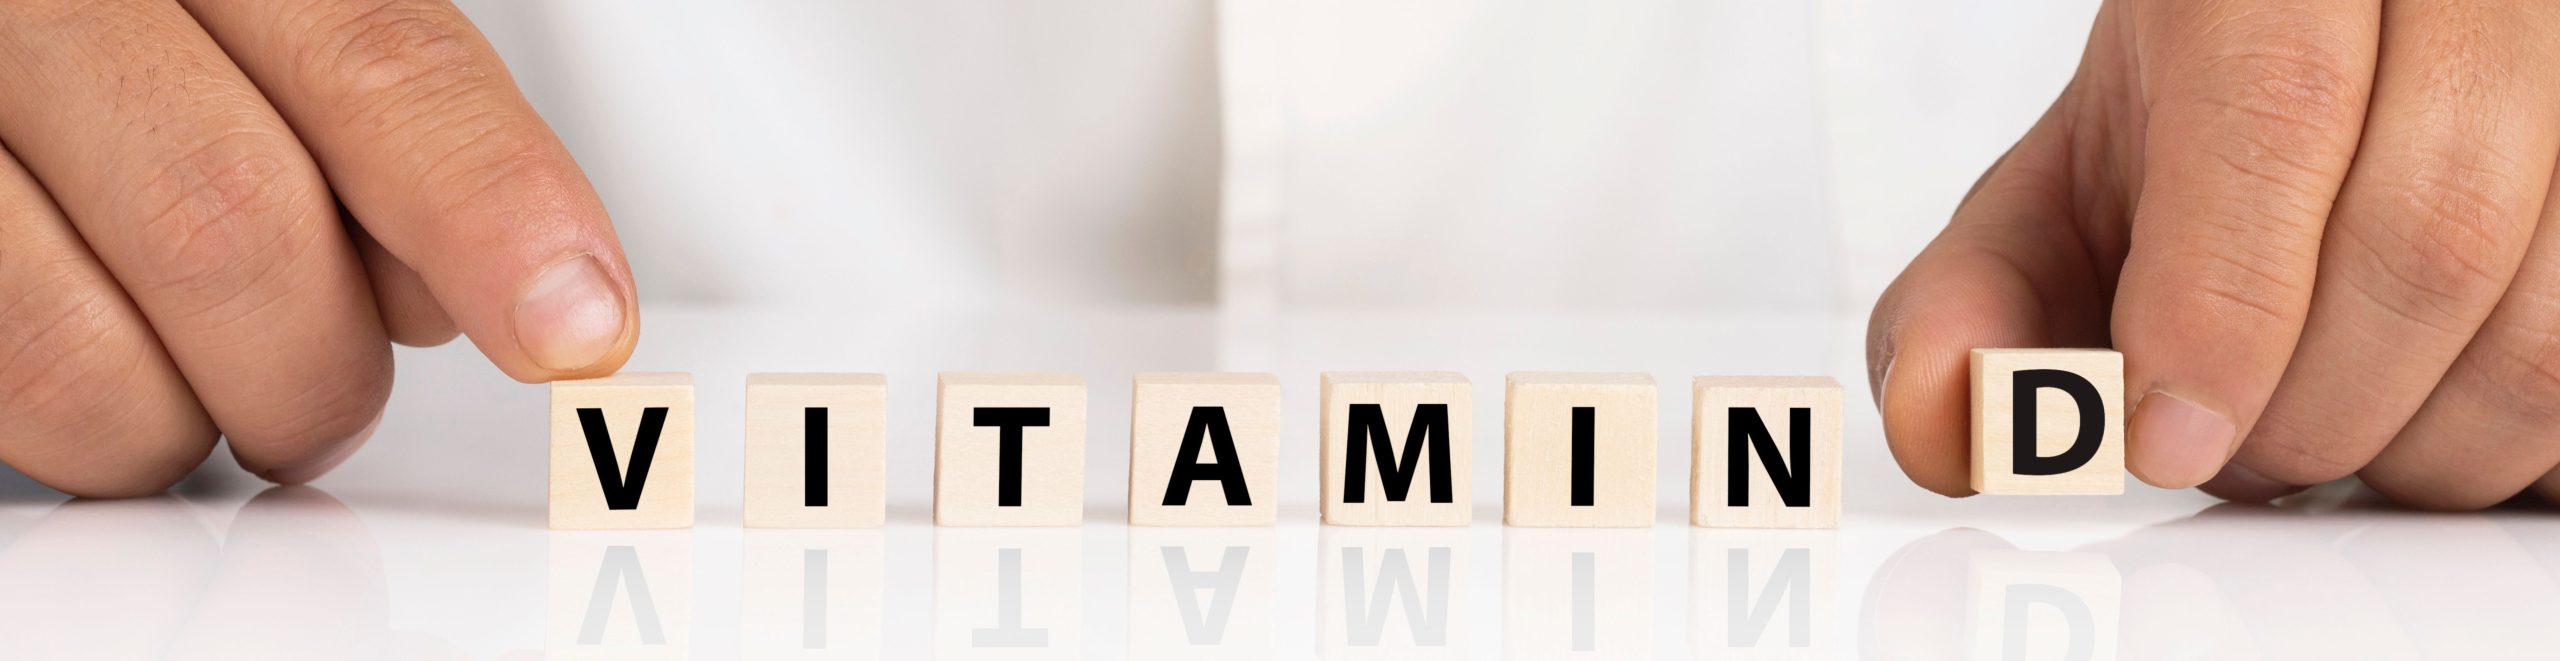 A doctor holding scrabble letter spelling vitamin D